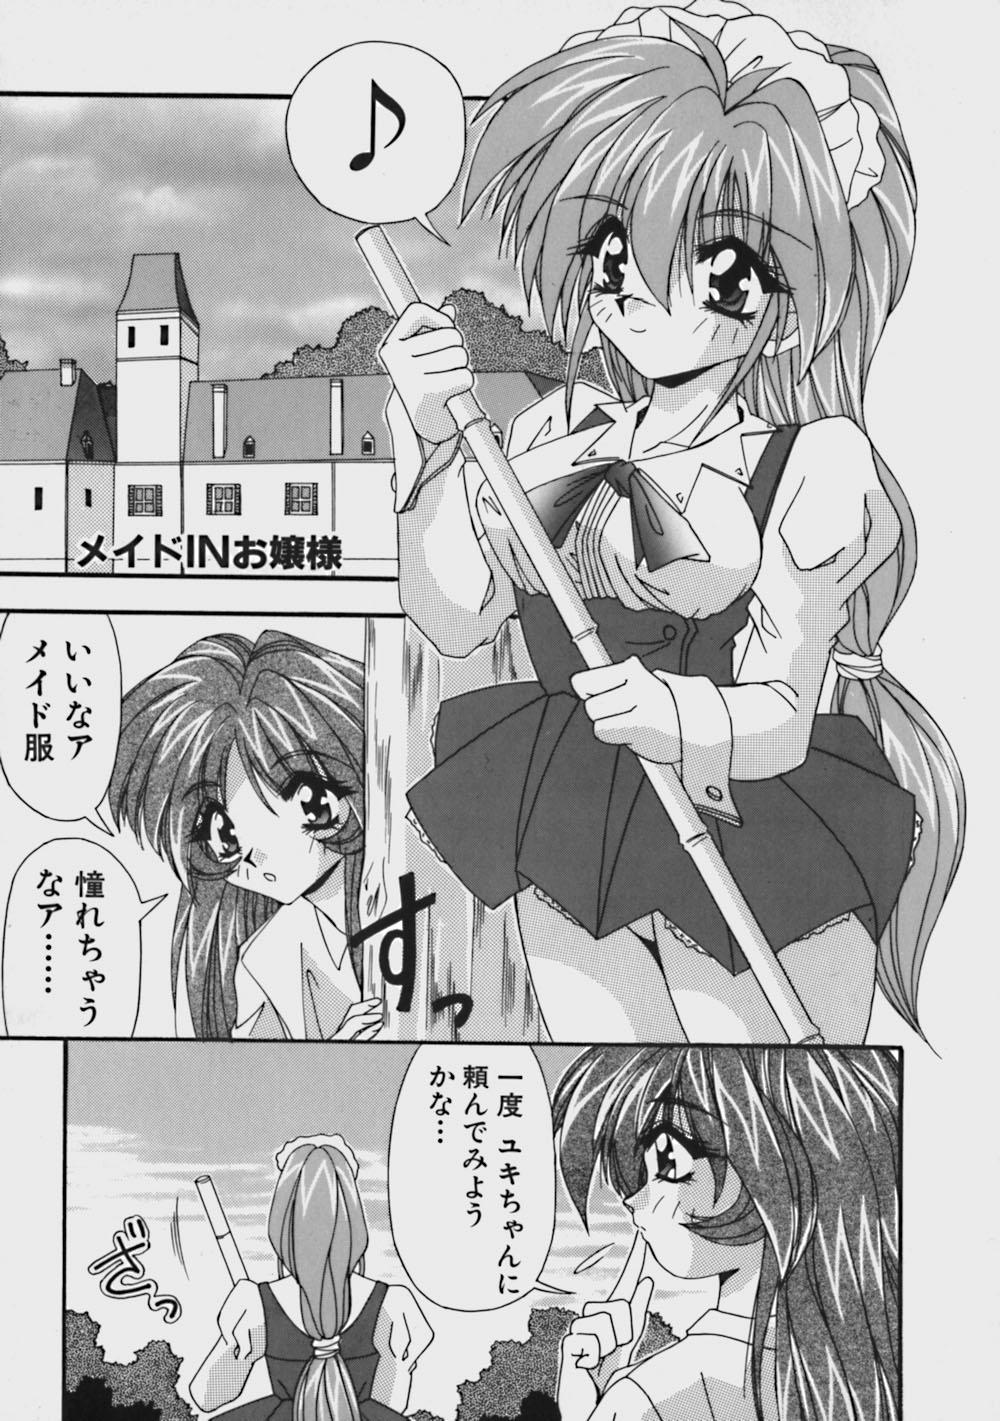 Piercing Kimama ni Peach Girl - Selfish Peach Girl Hidden - Page 8